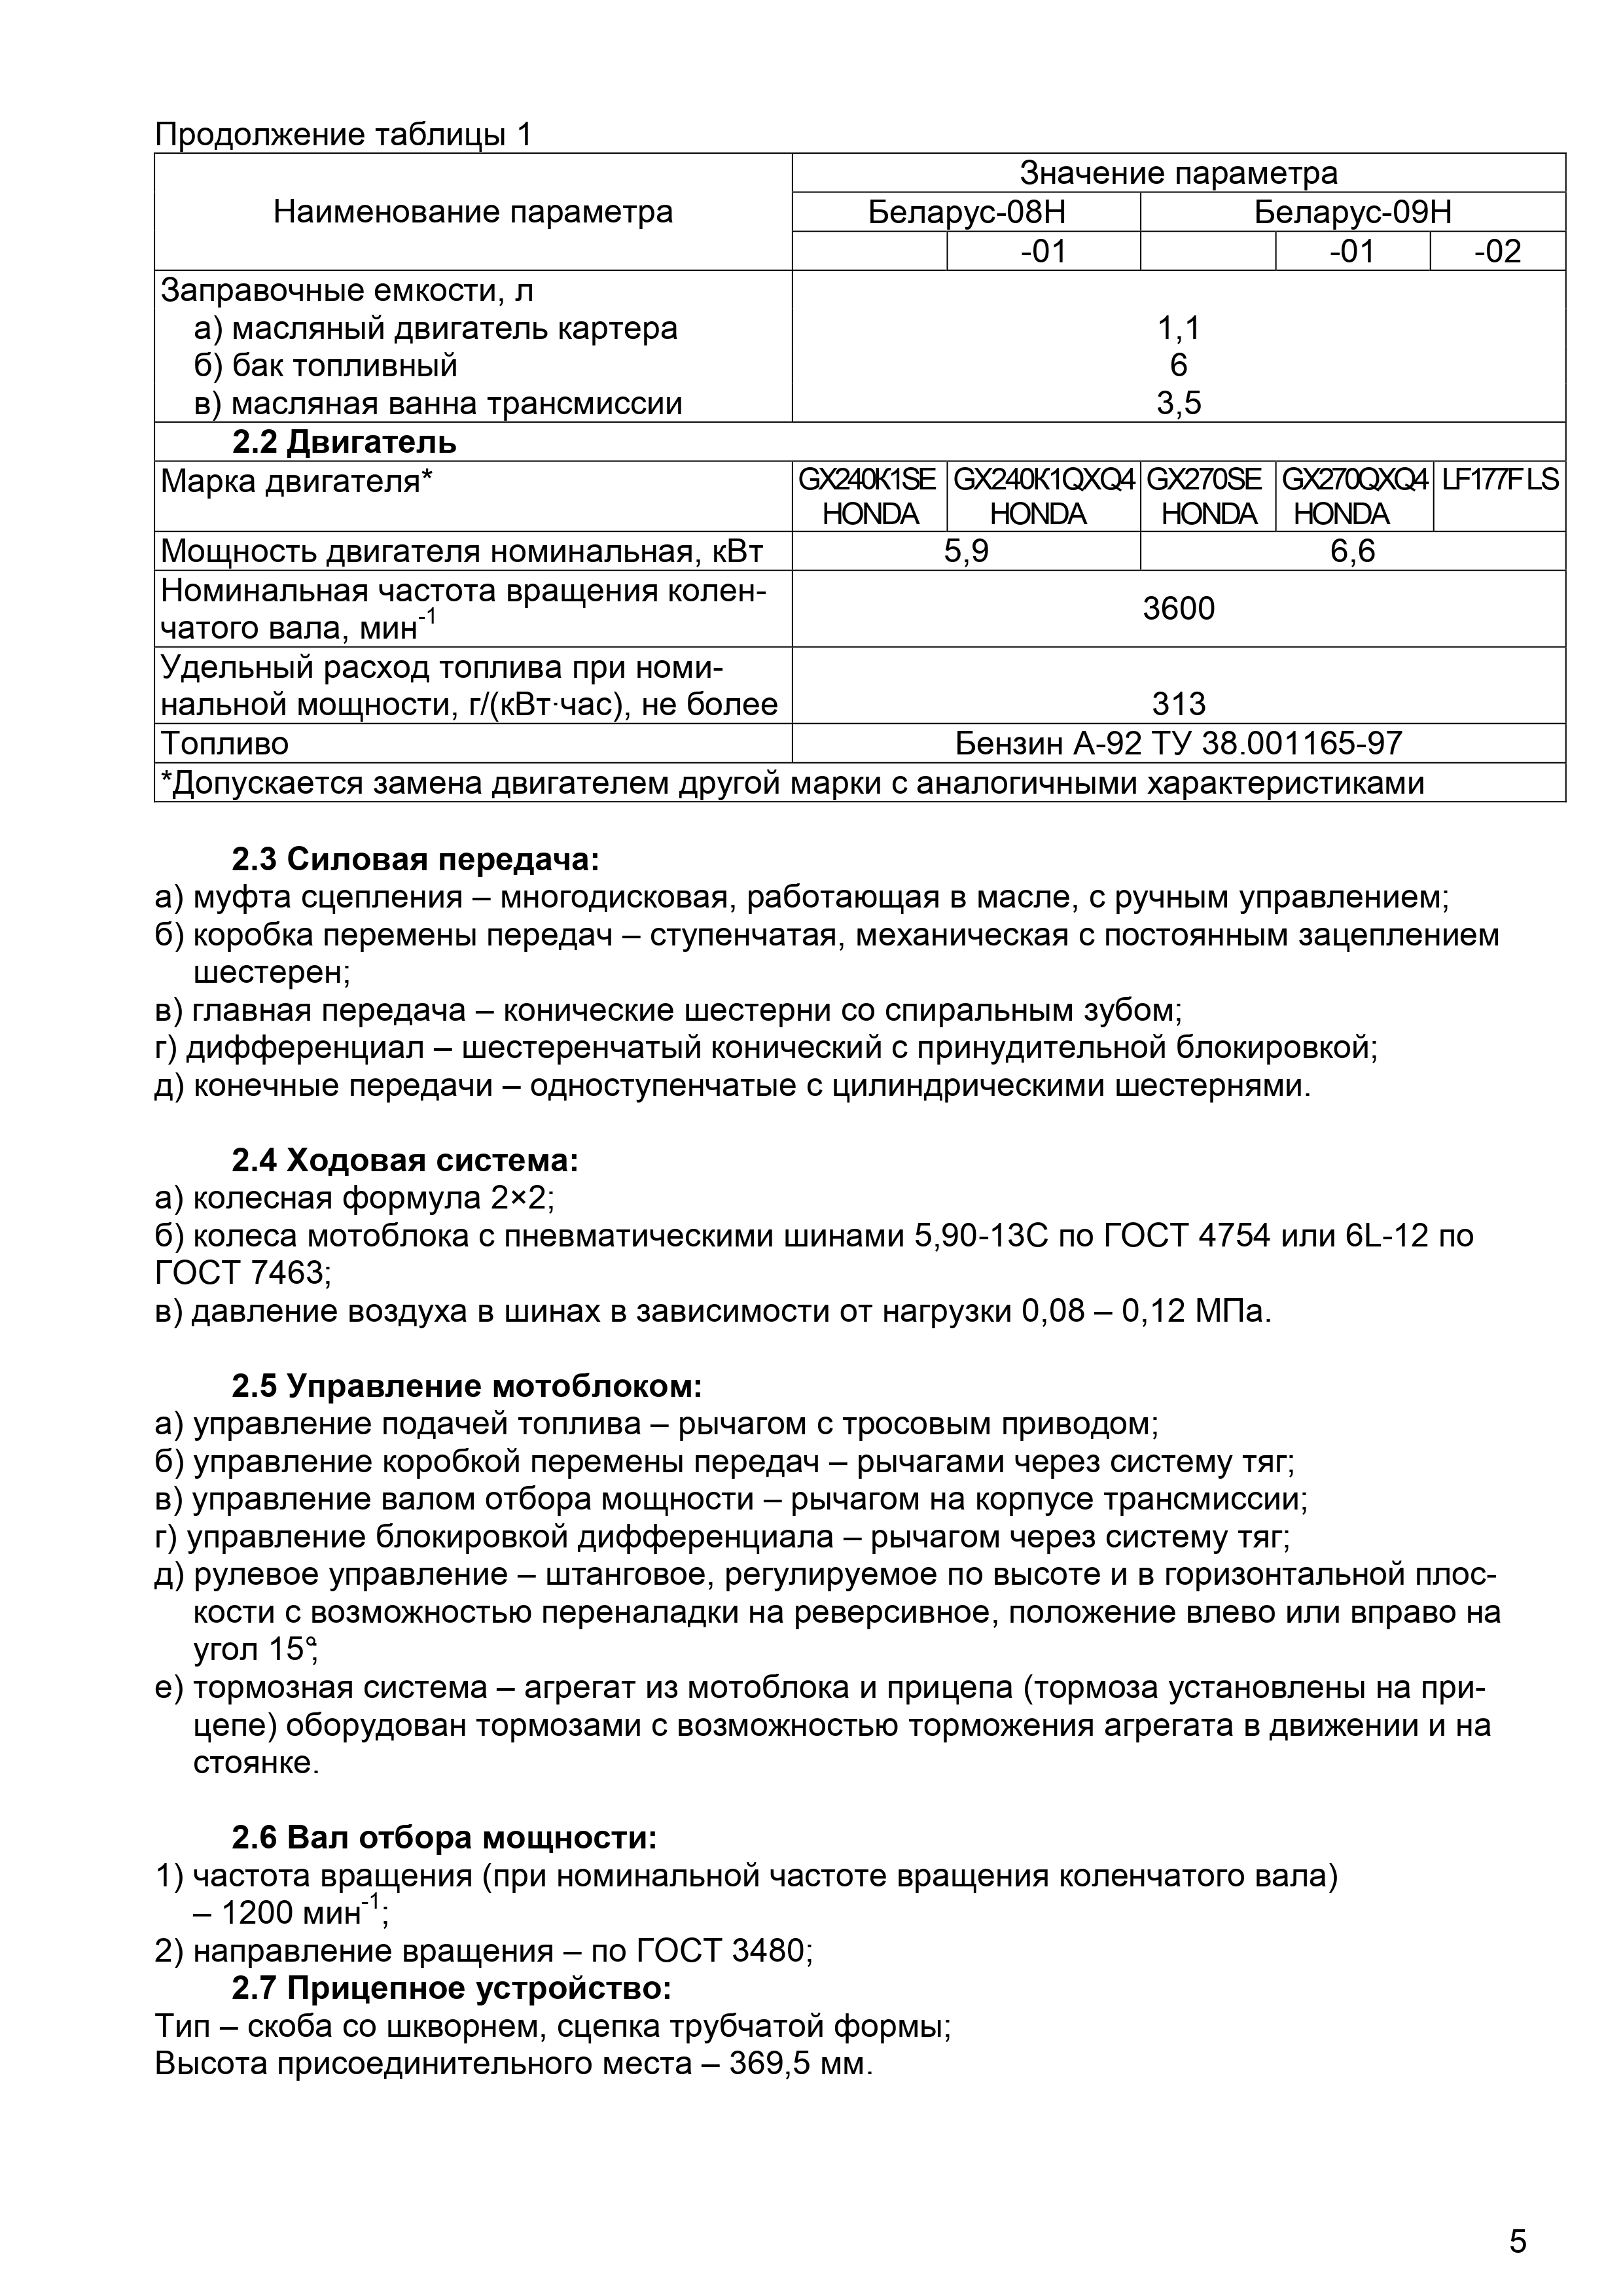 belarus_09h_manual i catalog (1)_page-0005